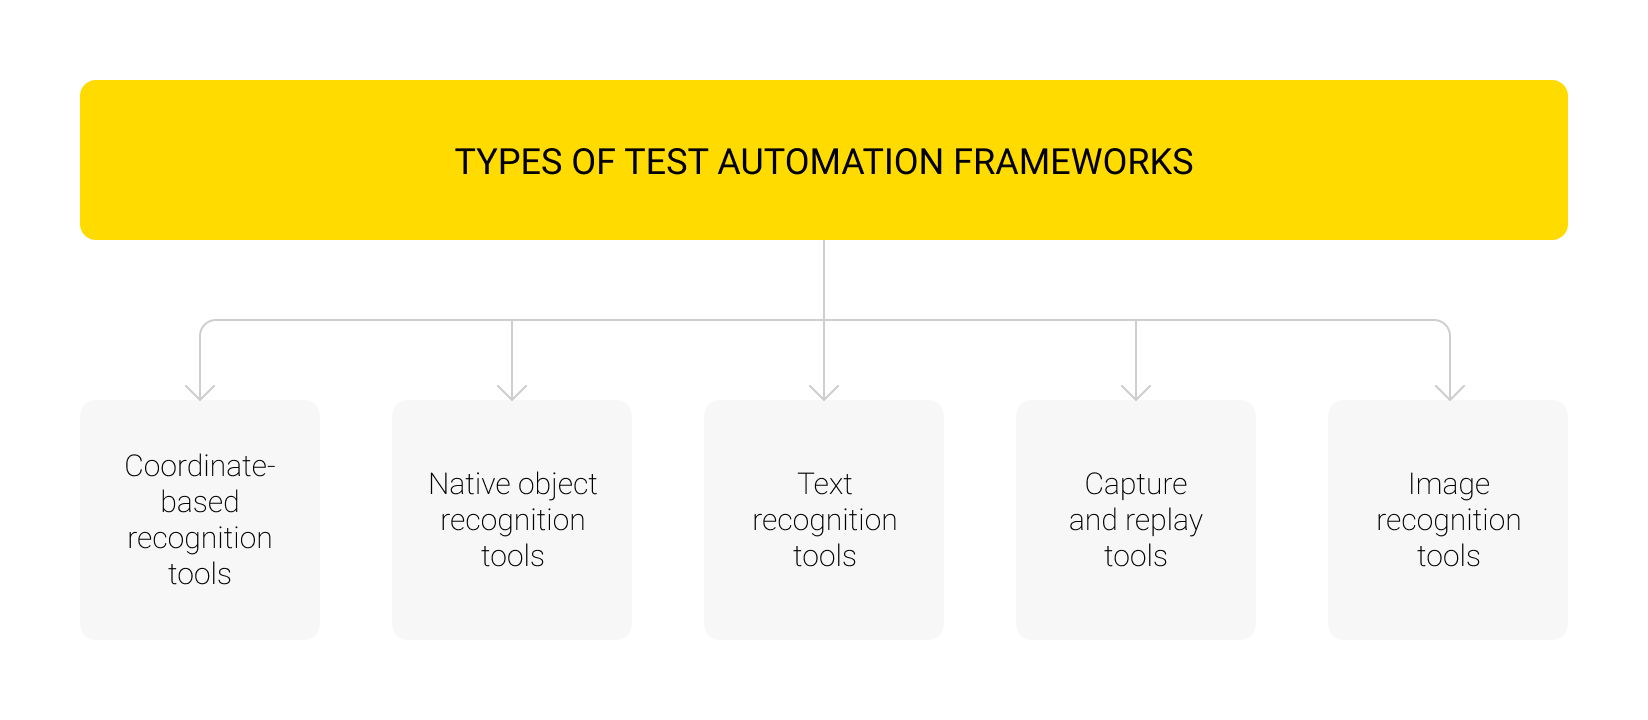 Types of test automation frameworks 